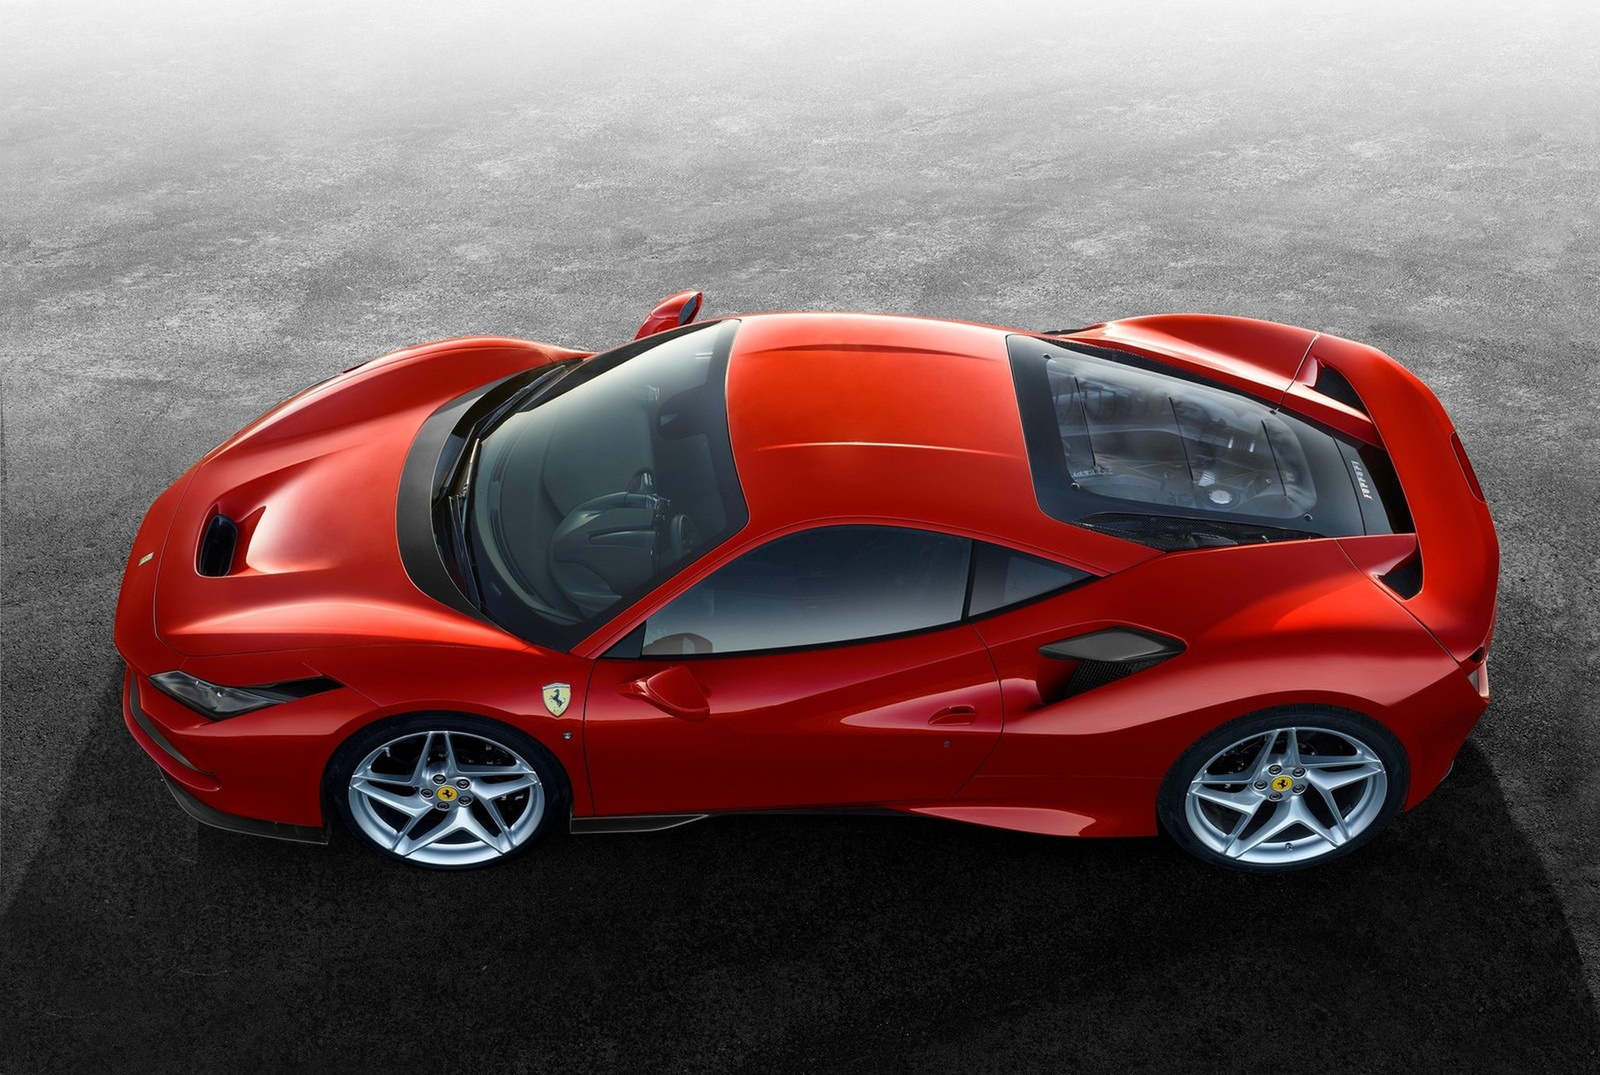 Ferrari-F8 Tributo-2020-1600-02